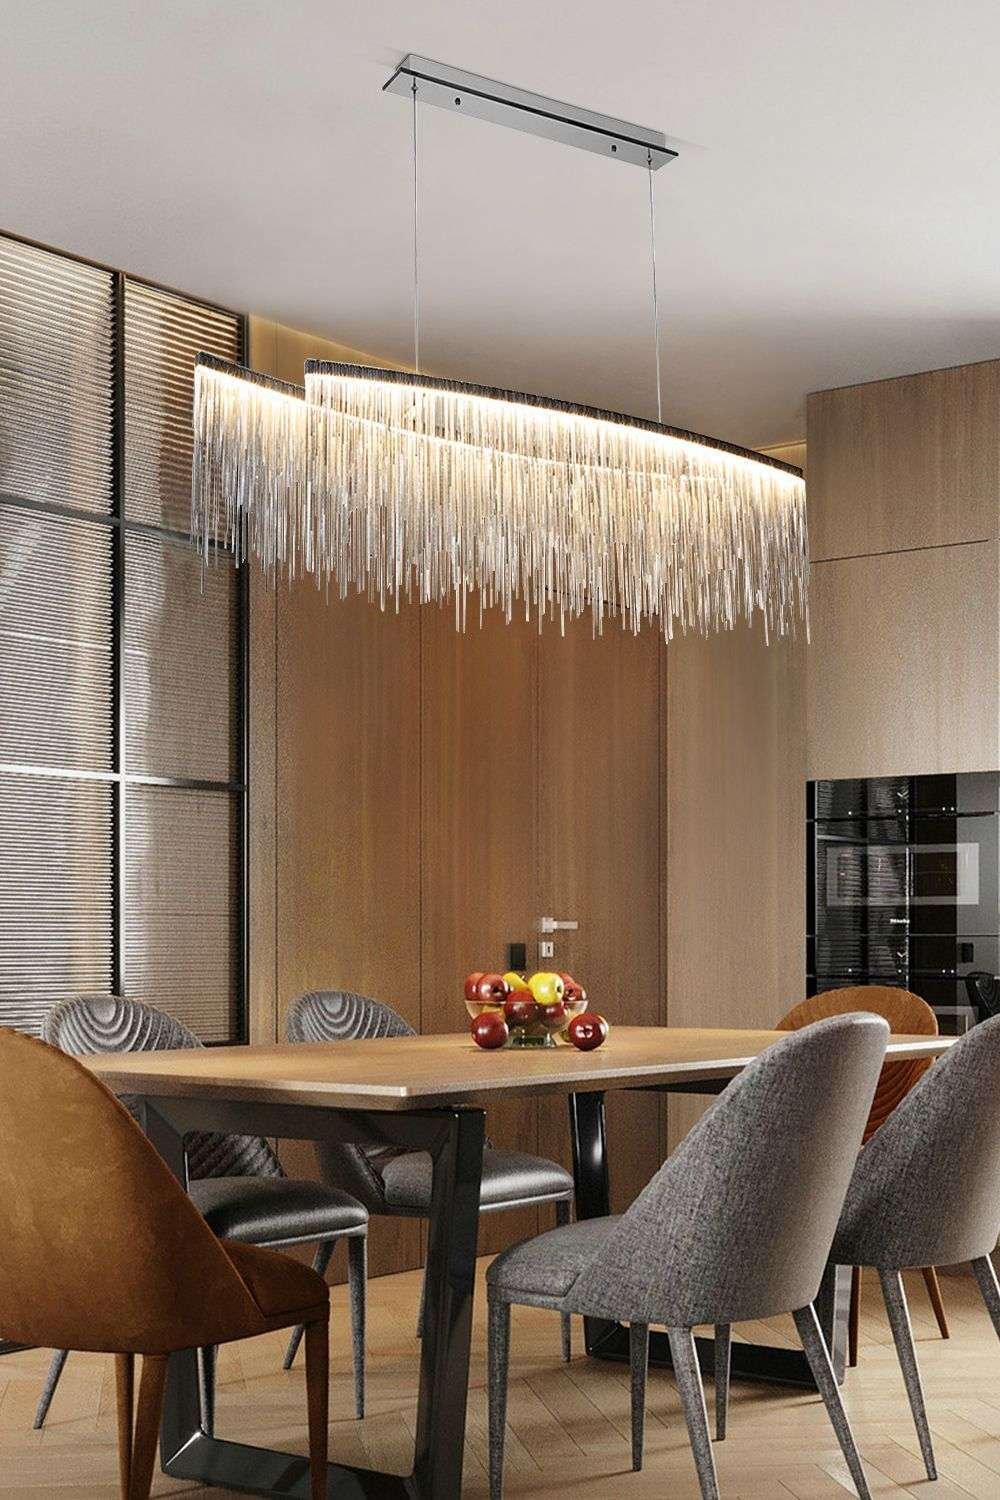 dining room chandelier ideas